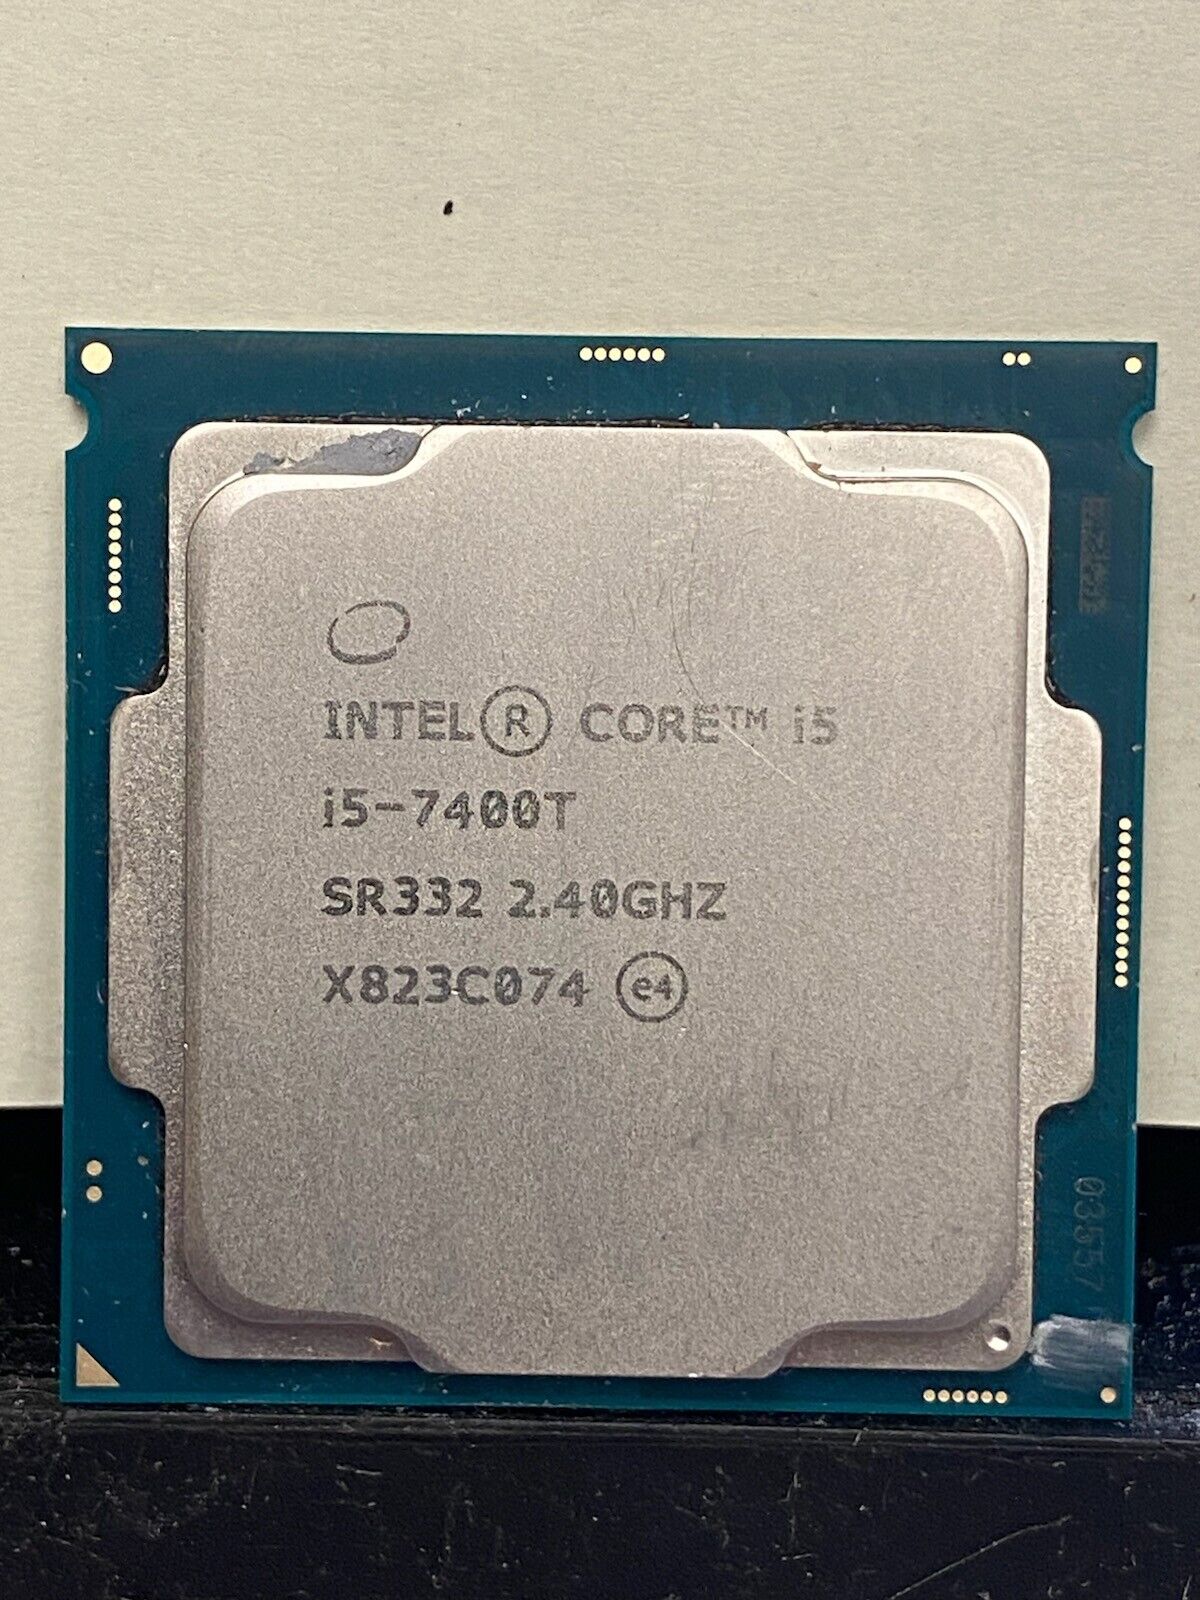 Intel Core i5-7400T (SR332) @ 2.40GHz /6MB / Socket 1151/ PROCESSOR ONLY